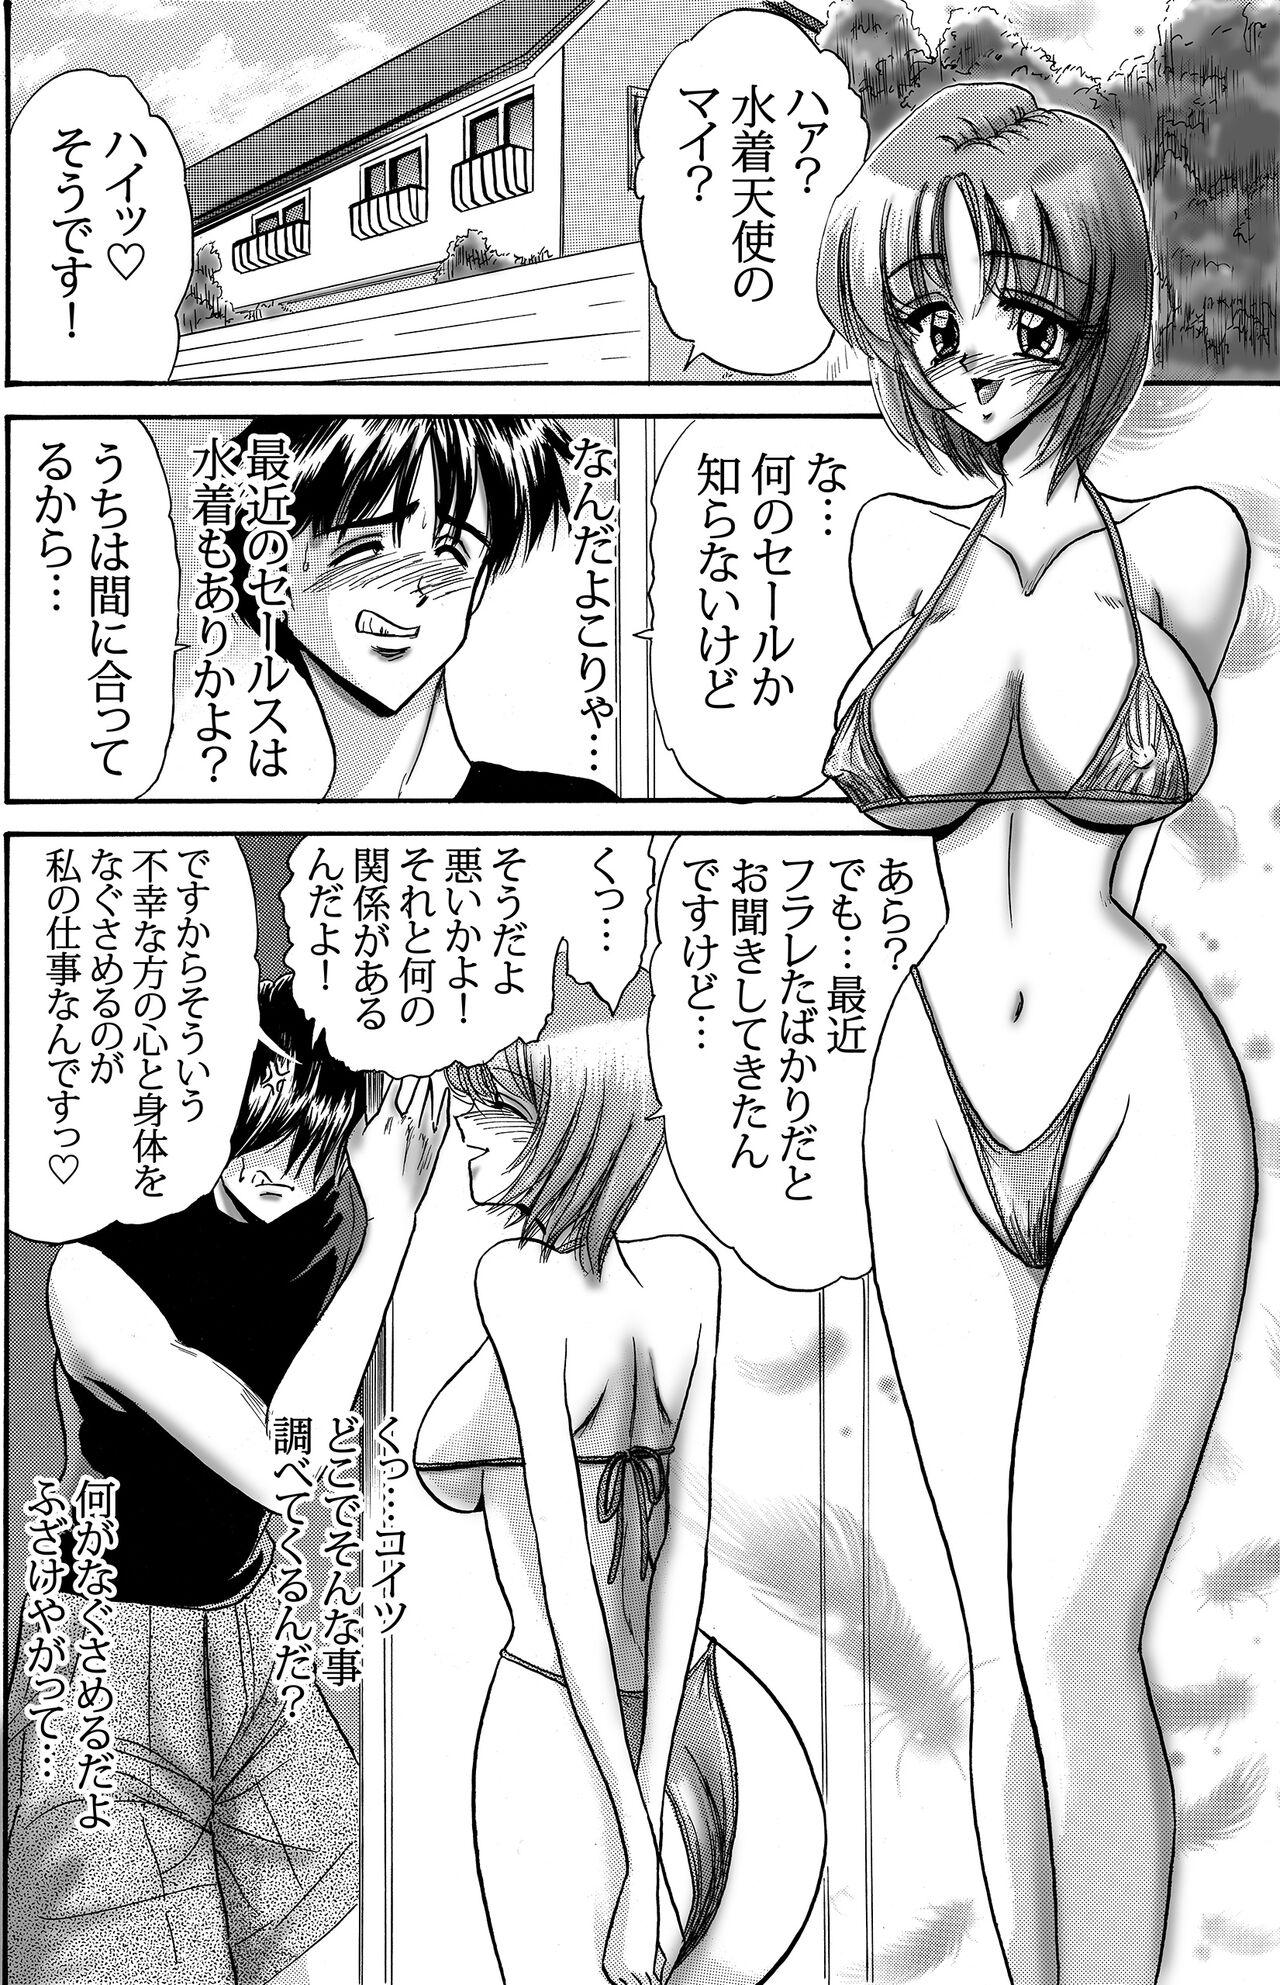 Heaven' s Comic Sakuhin-shuu 7 28